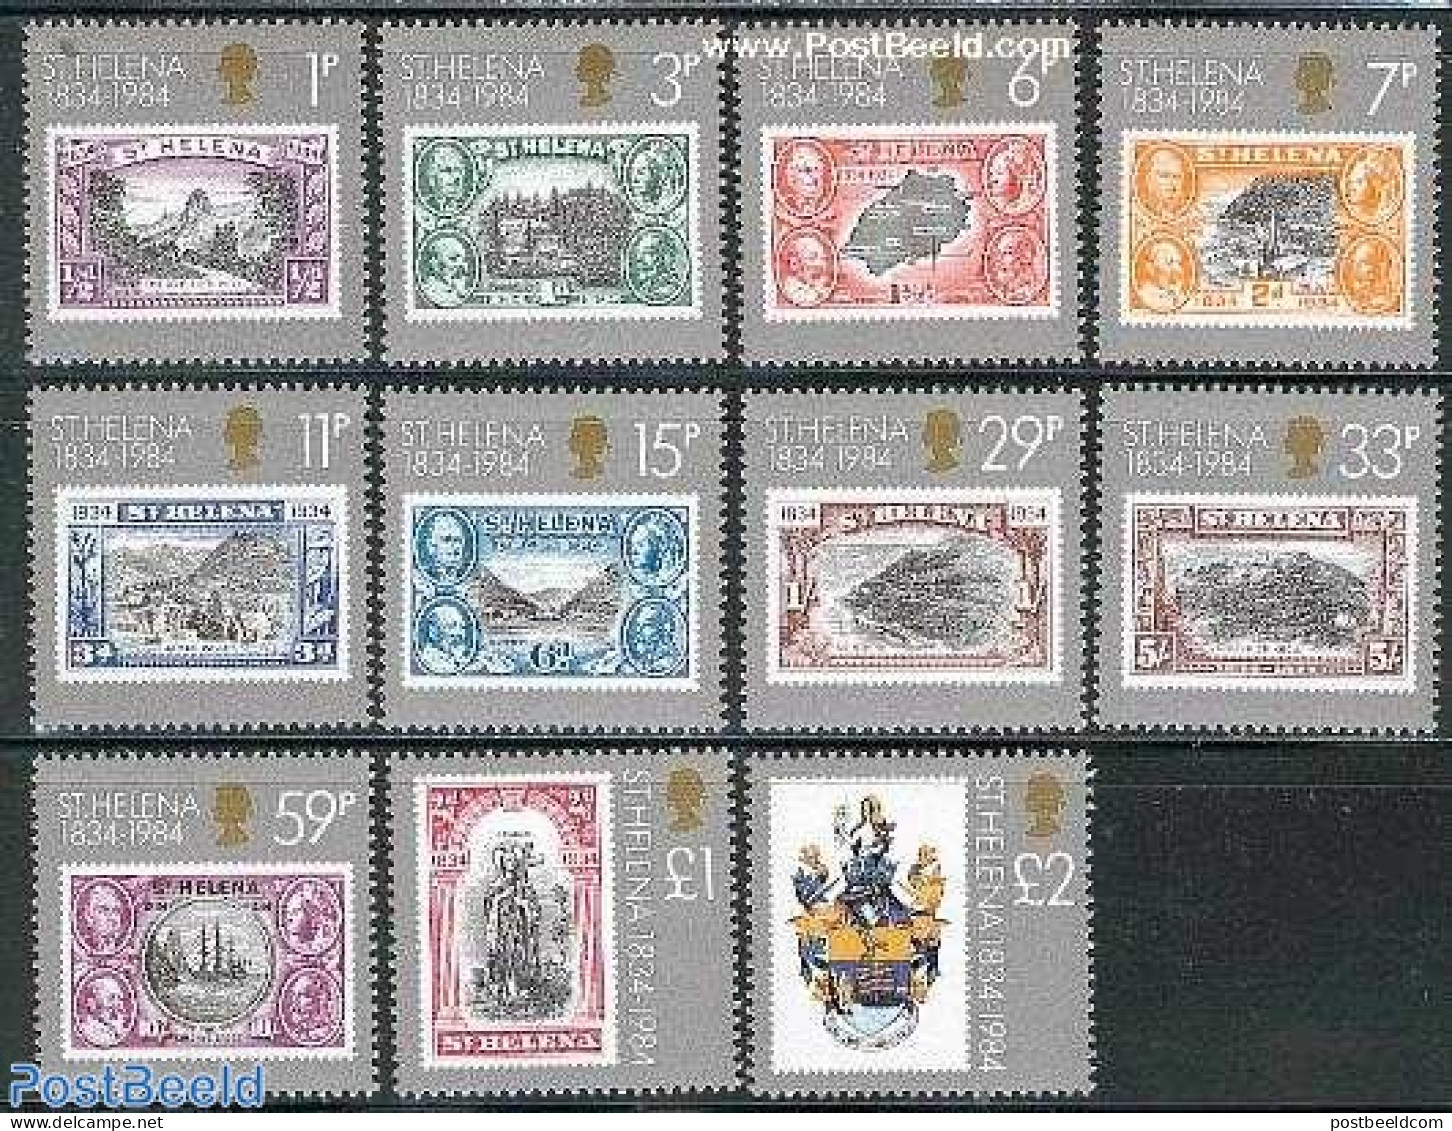 Saint Helena 1984 Colony 150th Anniversary 11v, Unused (hinged), Stamps On Stamps - Stamps On Stamps